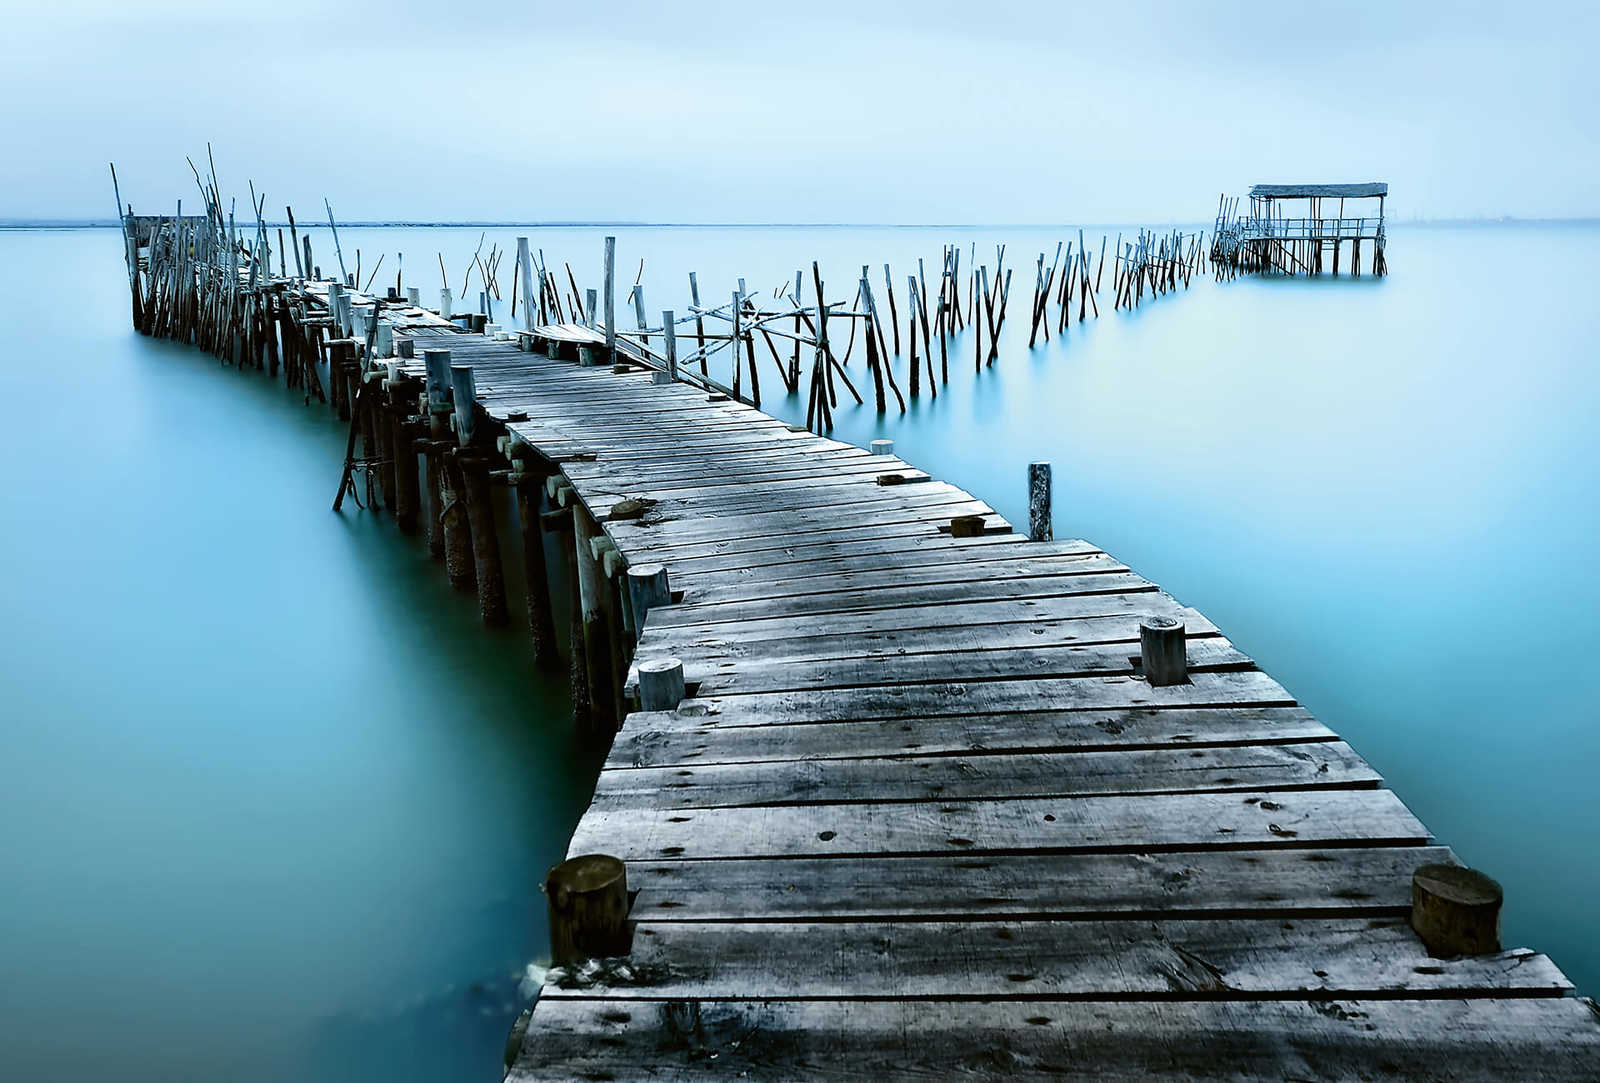         Fototapete alter Bootssteg im Wasser – Blau, Grau
    